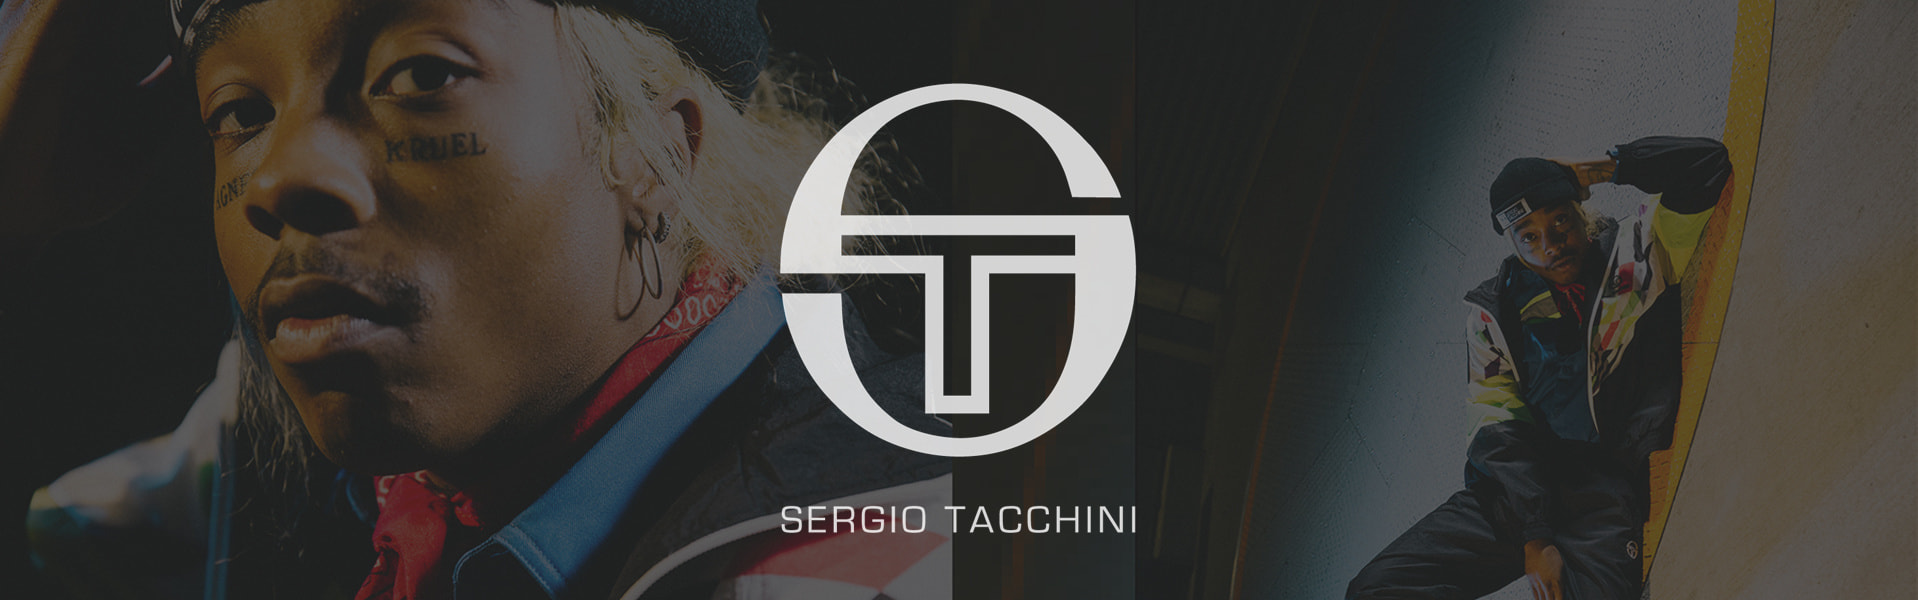 SERGIO TACCHINI ロゴ